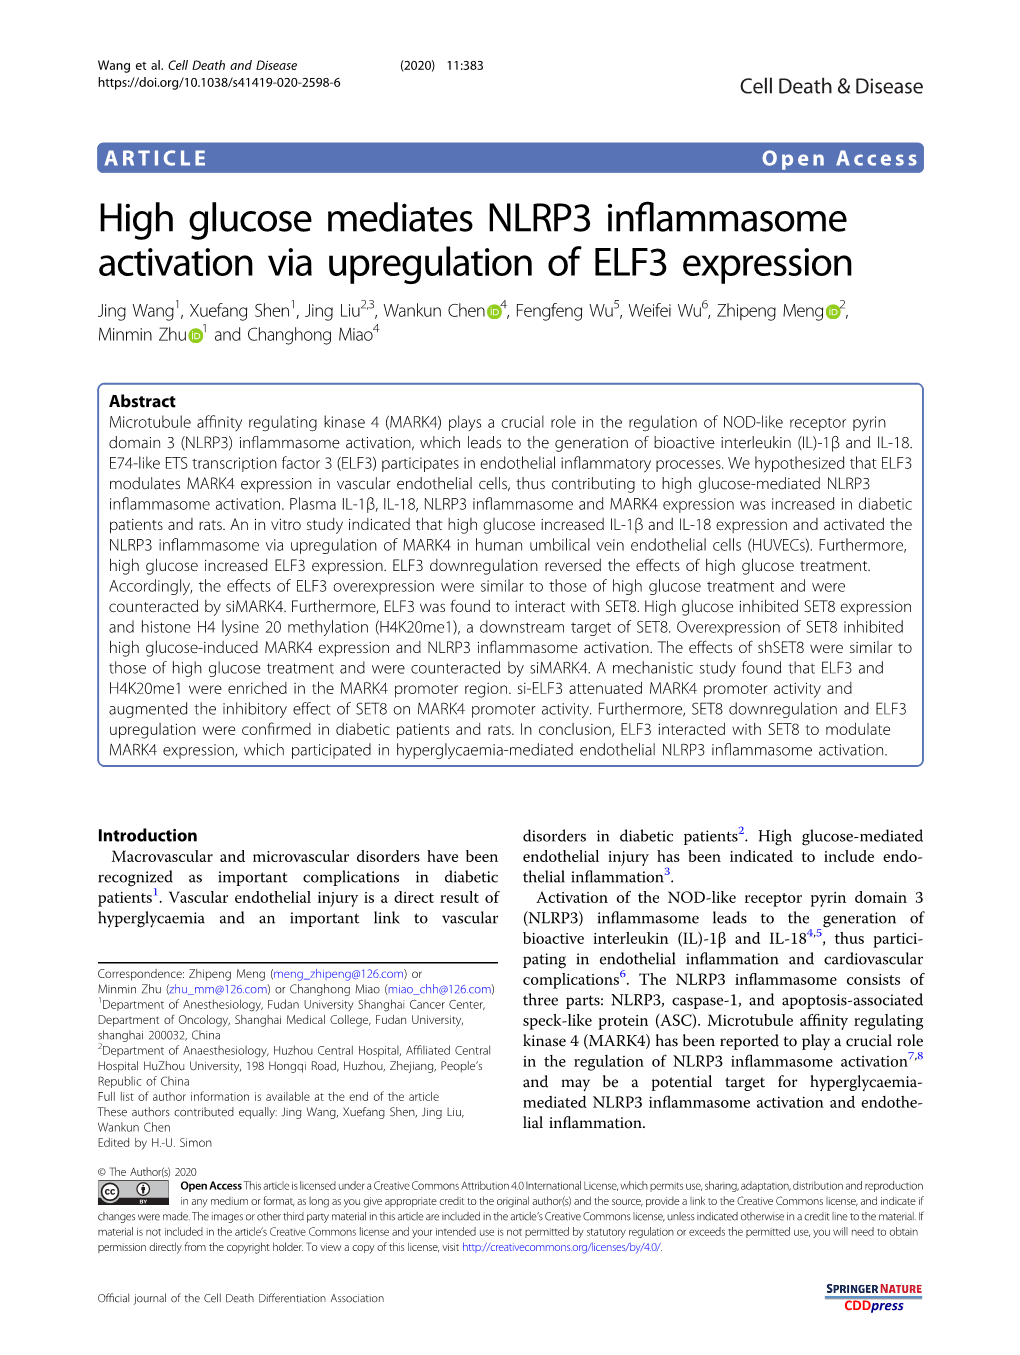 High Glucose Mediates NLRP3 Inflammasome Activation